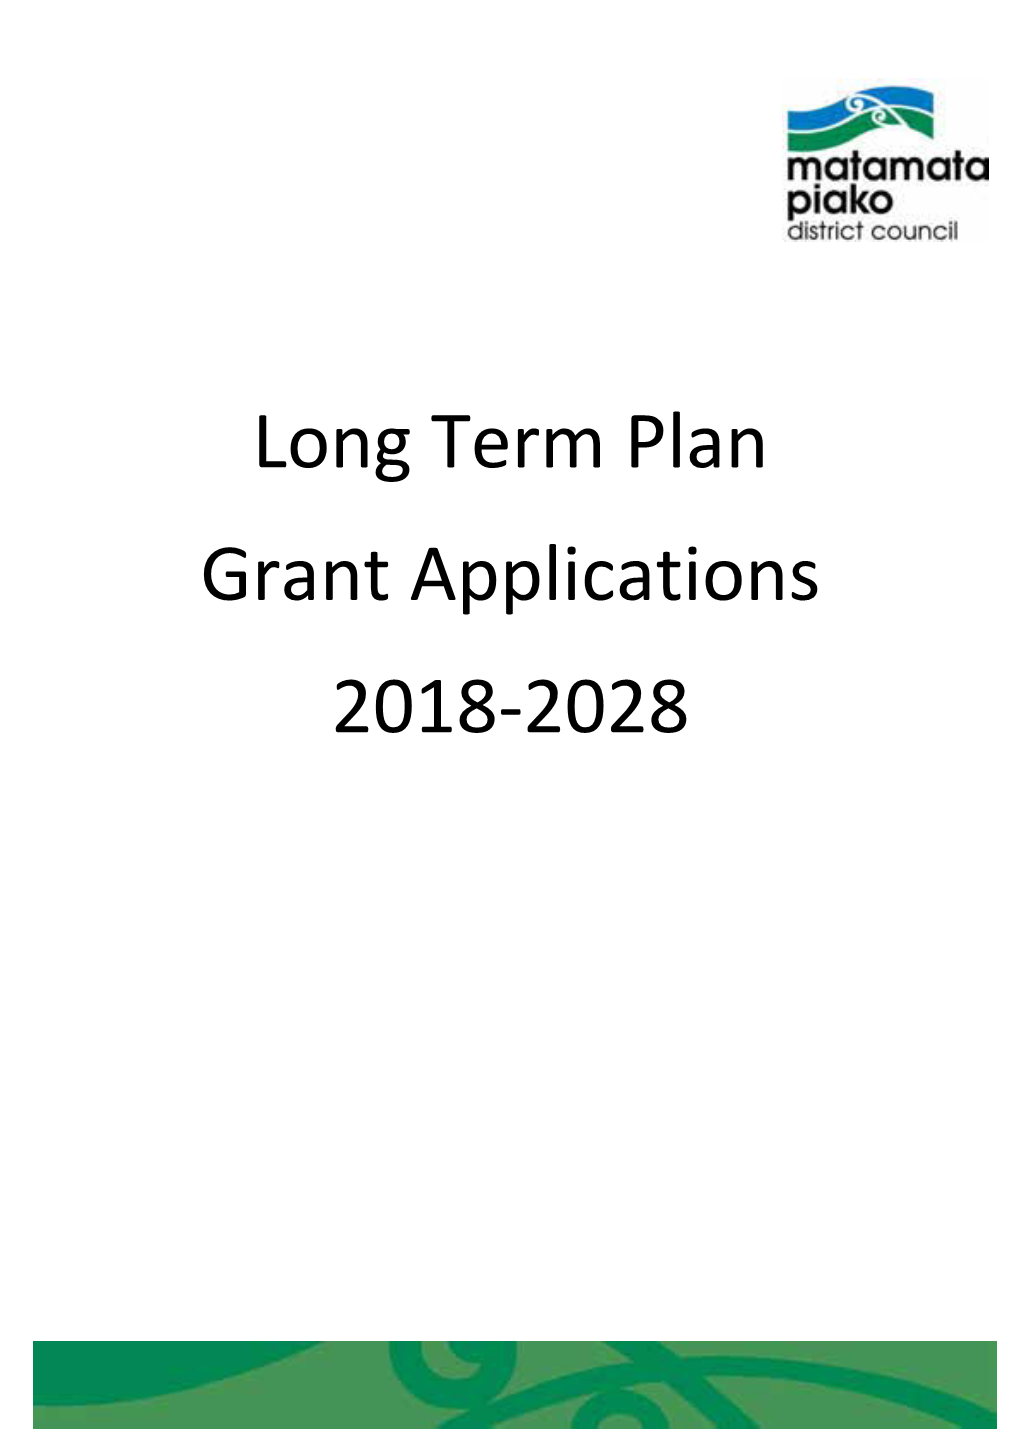 Long Term Plan Grant Applications 2018-2028